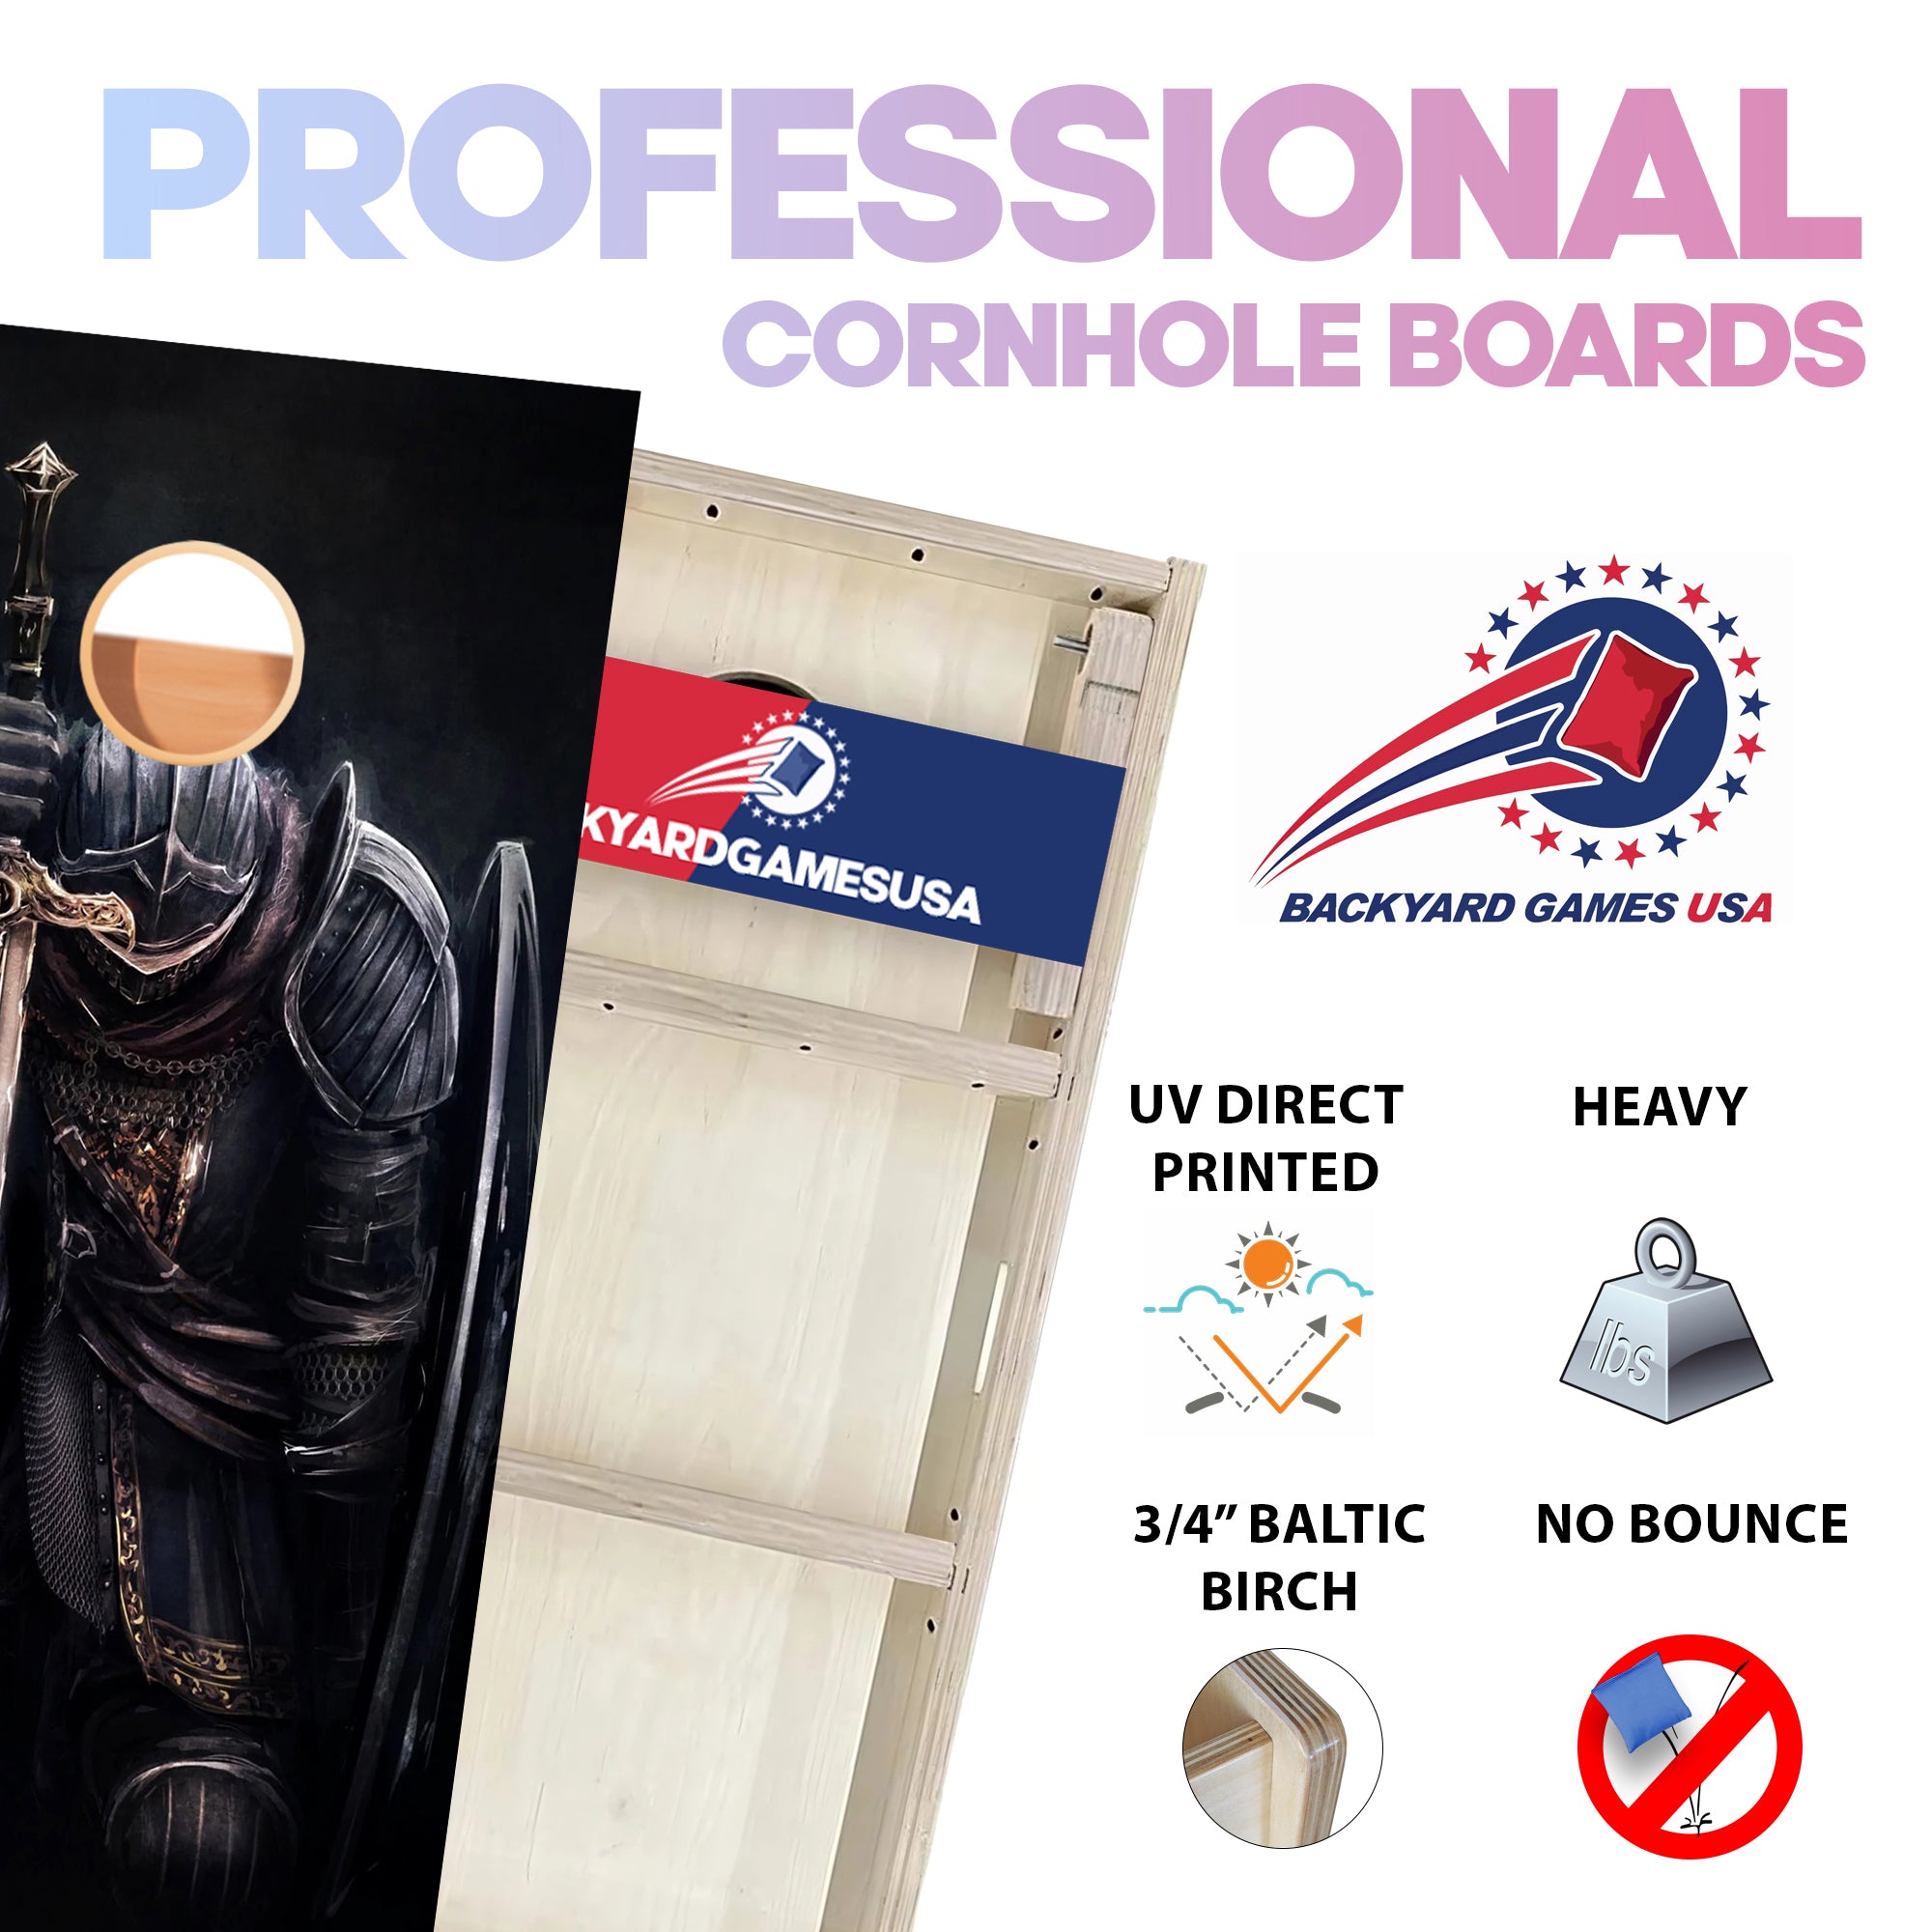 Knight Professional Cornhole Boards